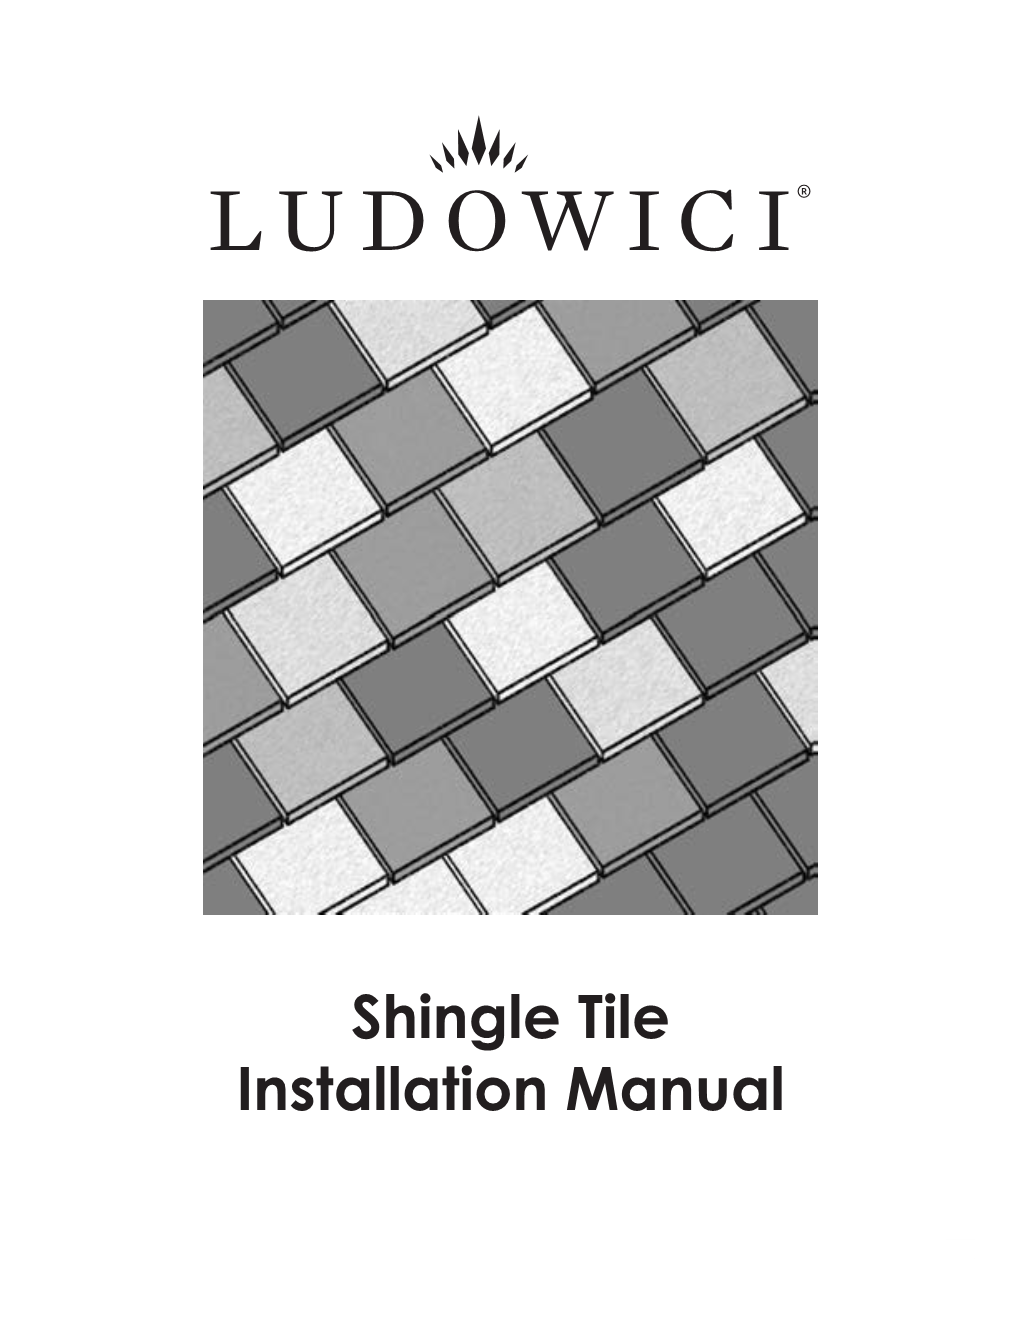 Shingle Tile Installation Manual Ludowici Shingle Tile Installation Manual